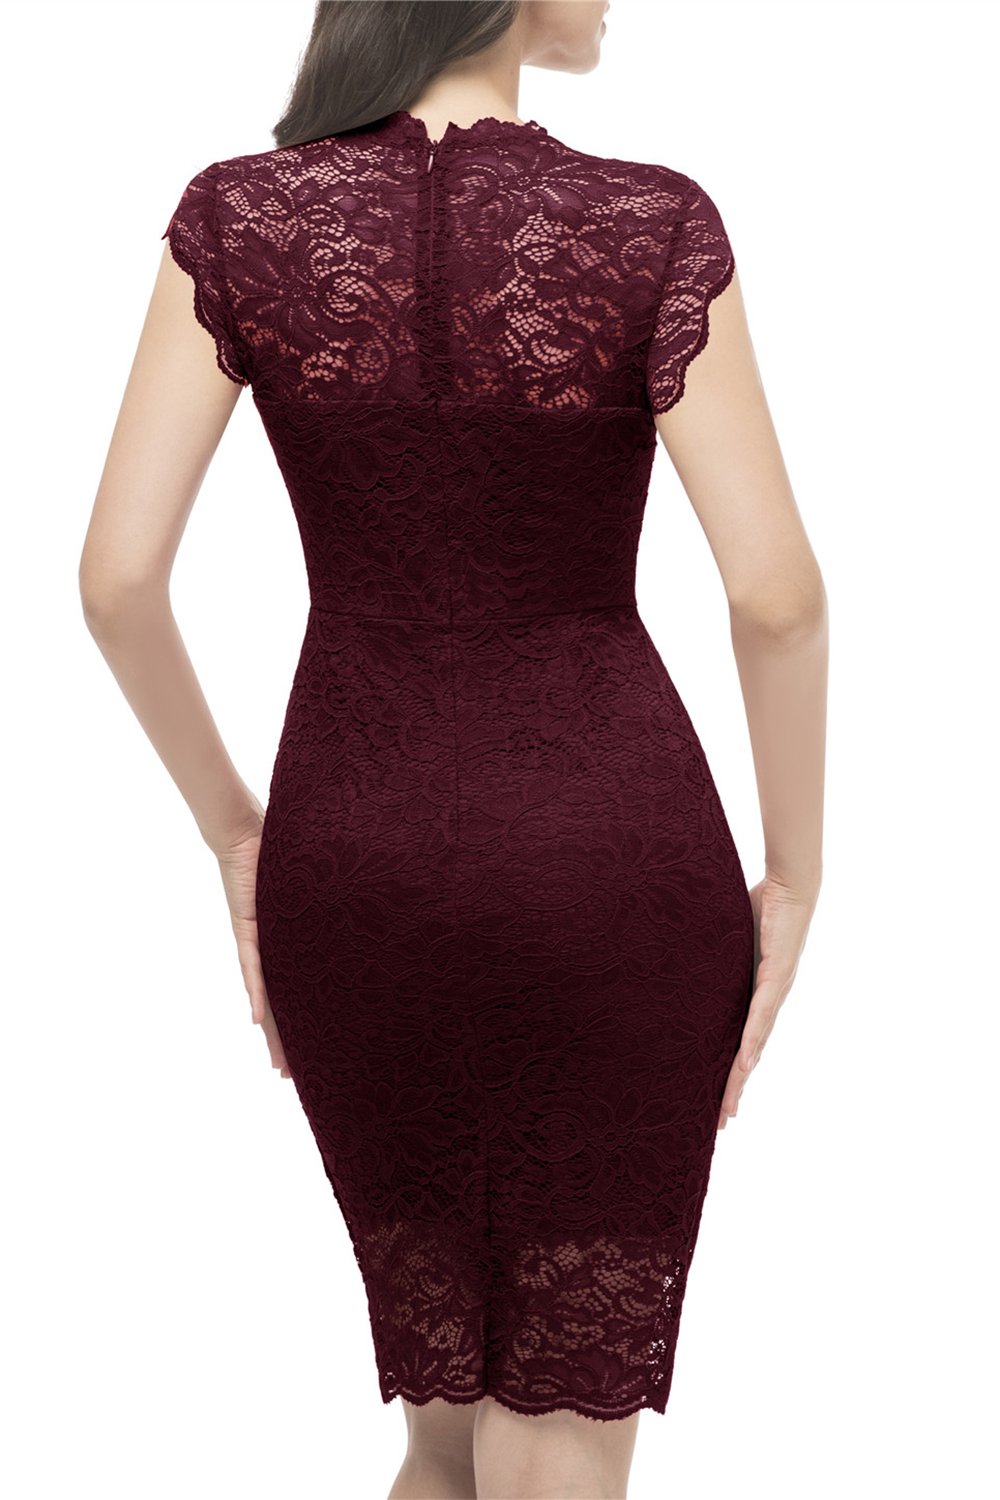 Burgundy Bodycon Lace Dress